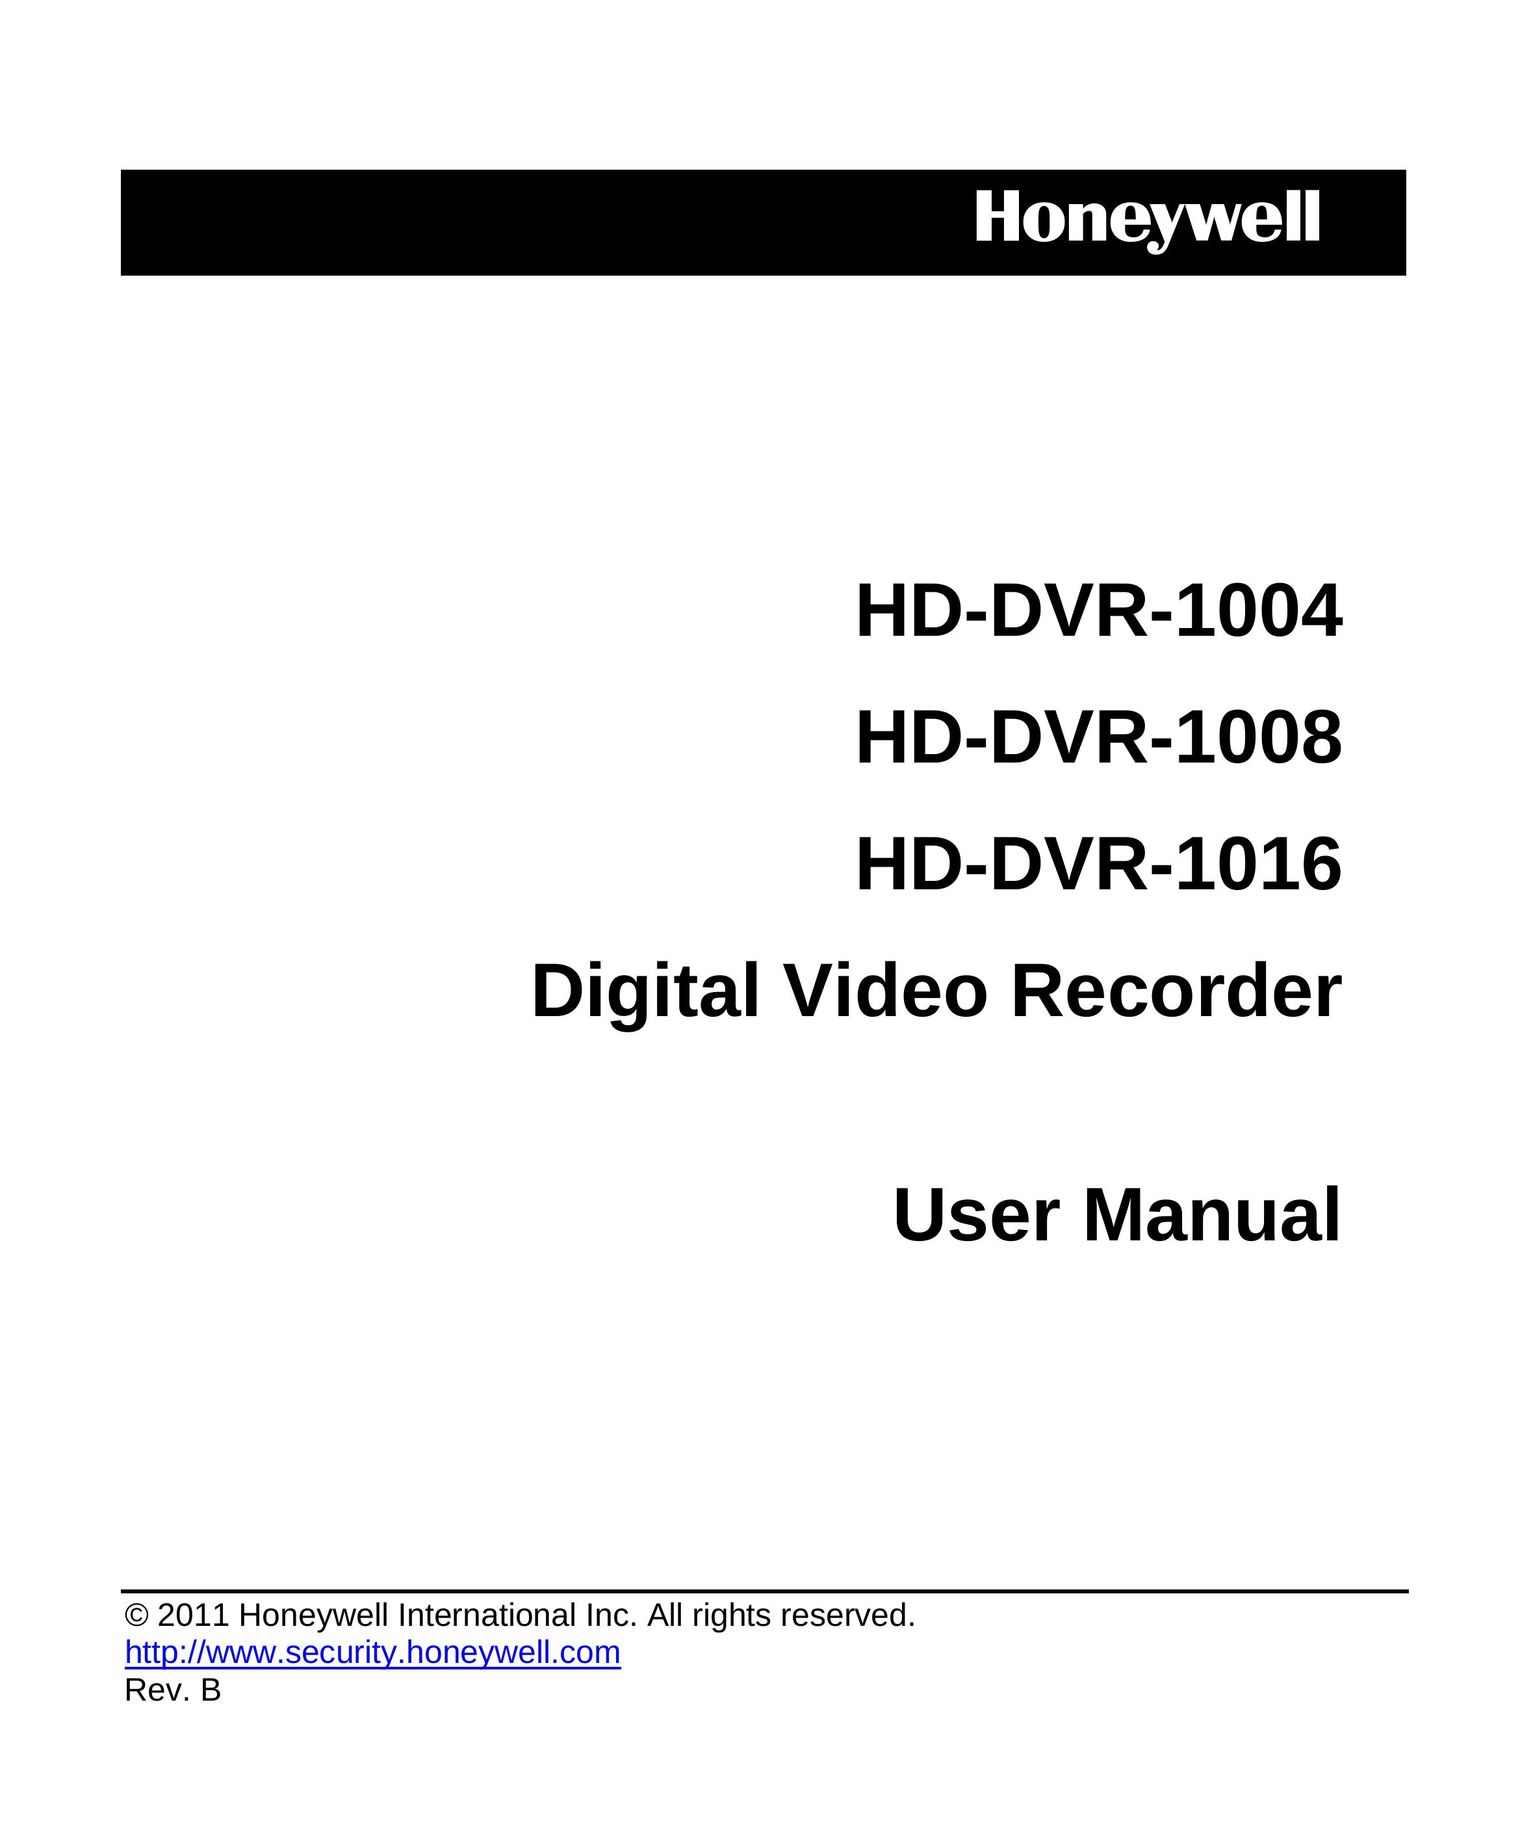 Honeywell HD-DVR-1004 DVR User Manual